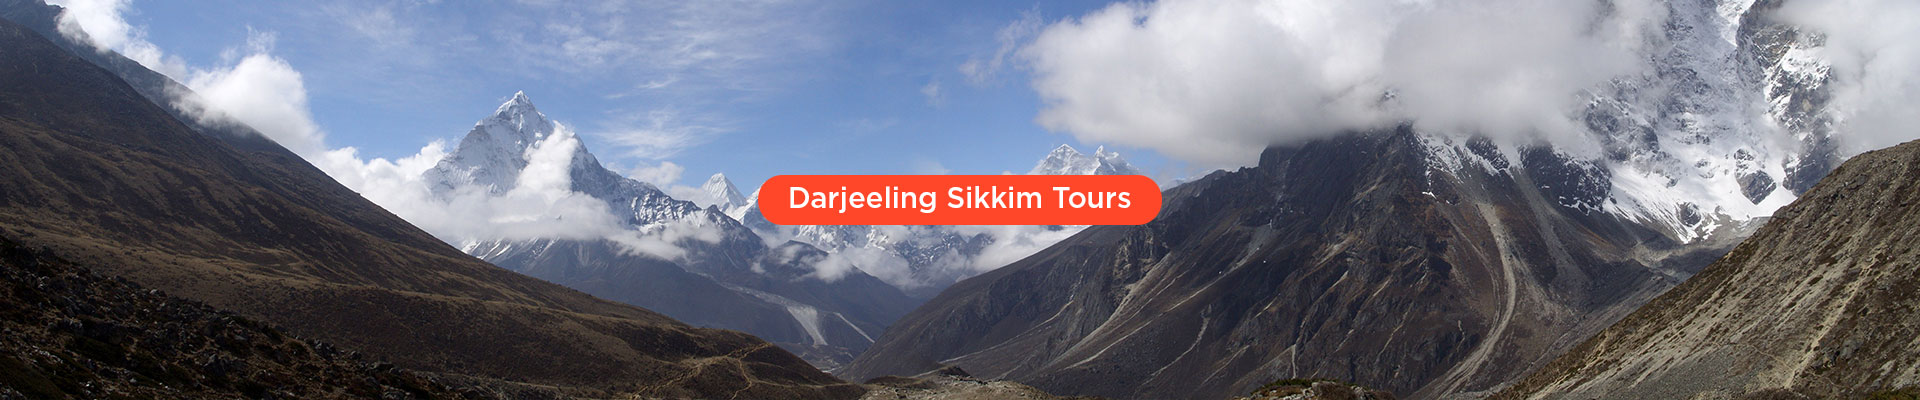 darjeeling-sikkim Tours